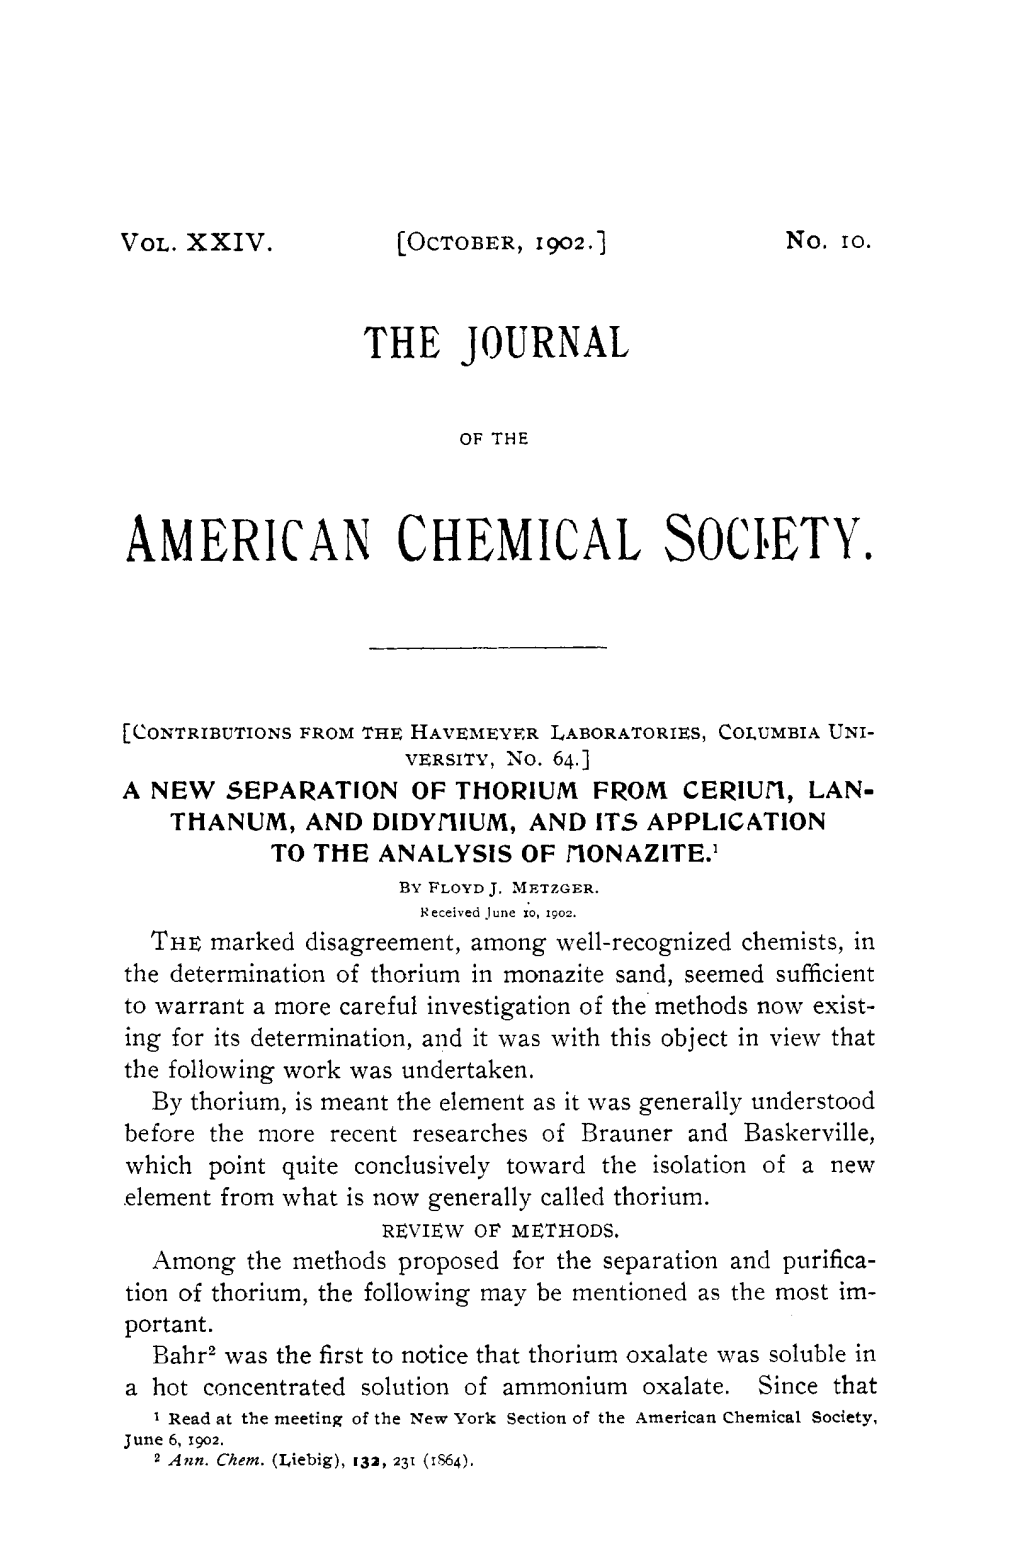 Ameklcan CHEMICAL SOCIIETY